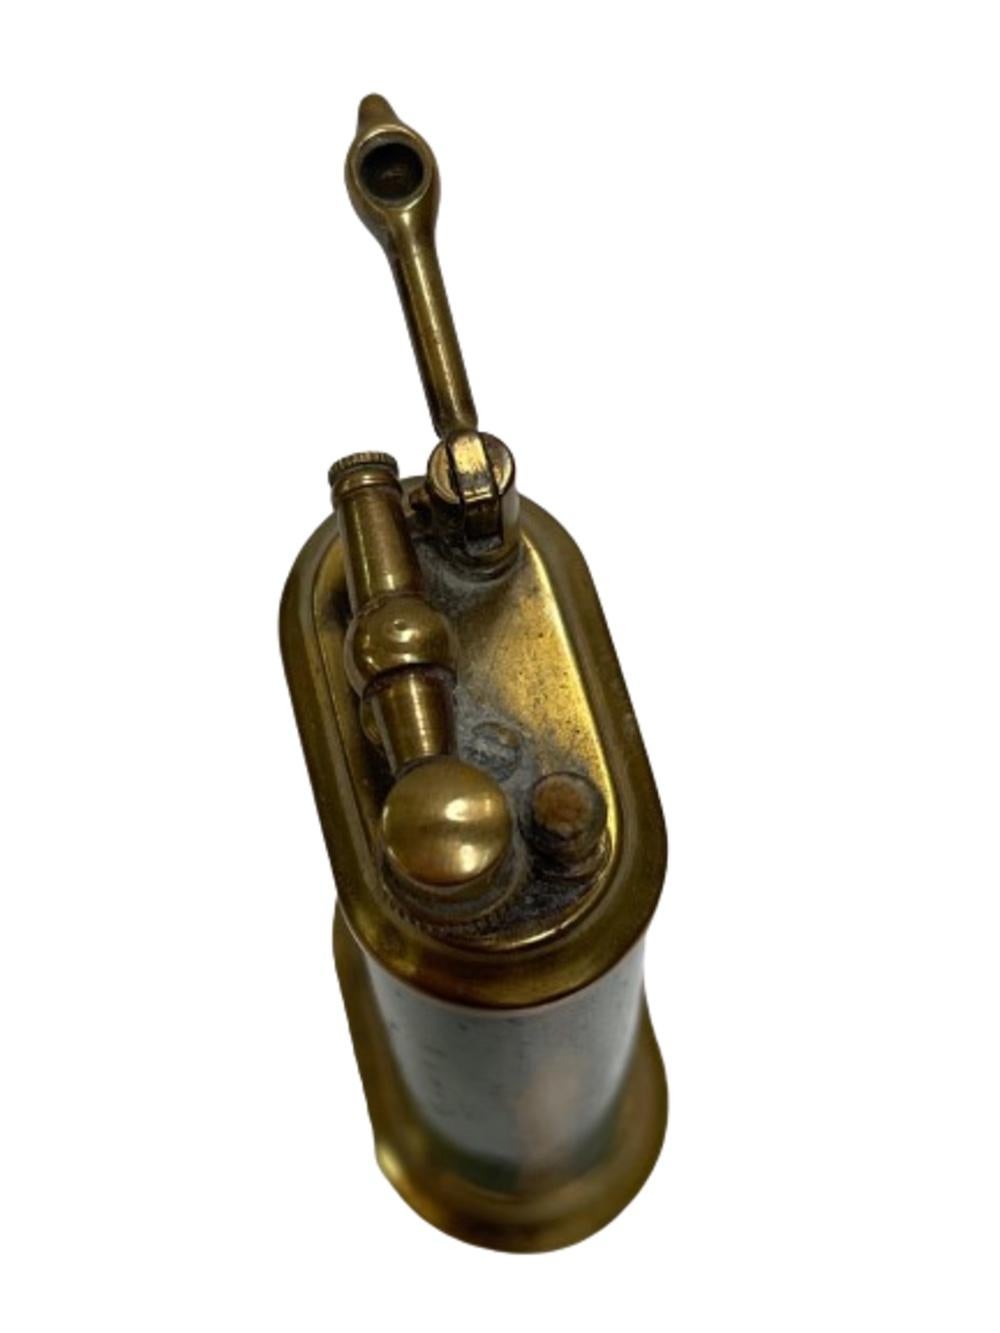 American Brass Lift Arm Table Cigarette Lighter by Park Sherman